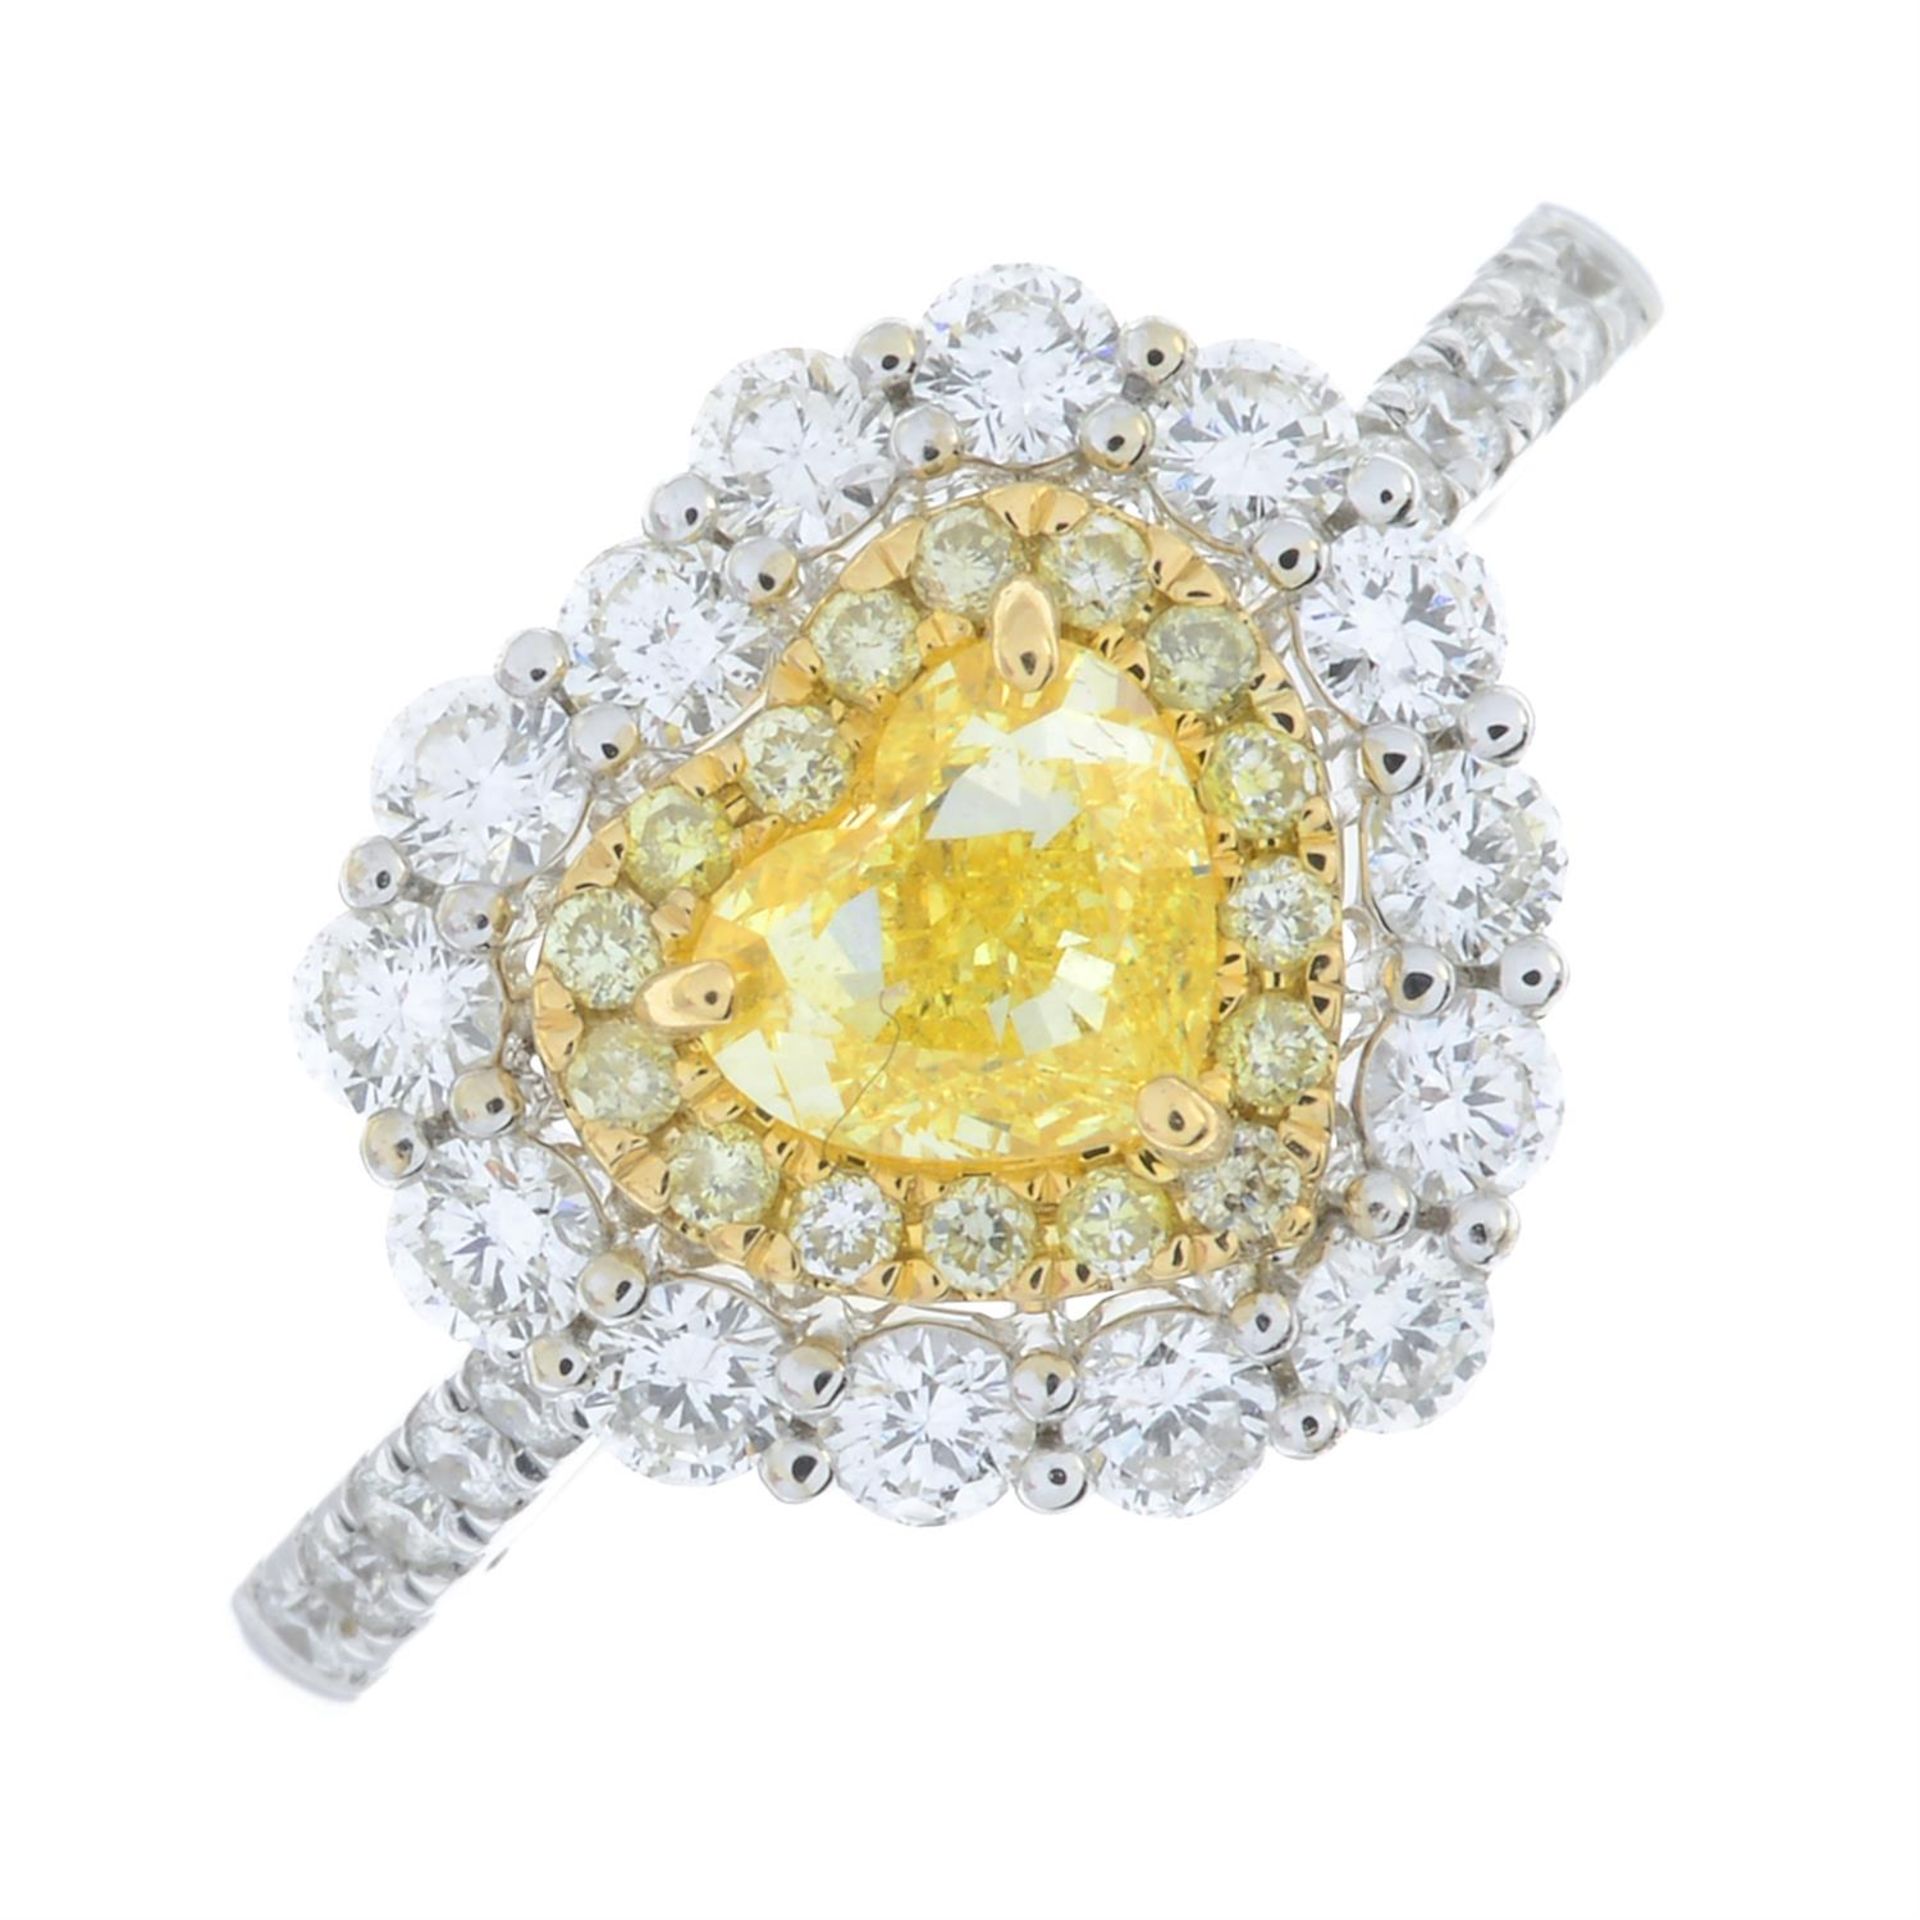 An 18ct gold Fancy Intense Yellow heart-shape diamond, 'yellow' diamond and diamond cluster ring. - Image 2 of 6